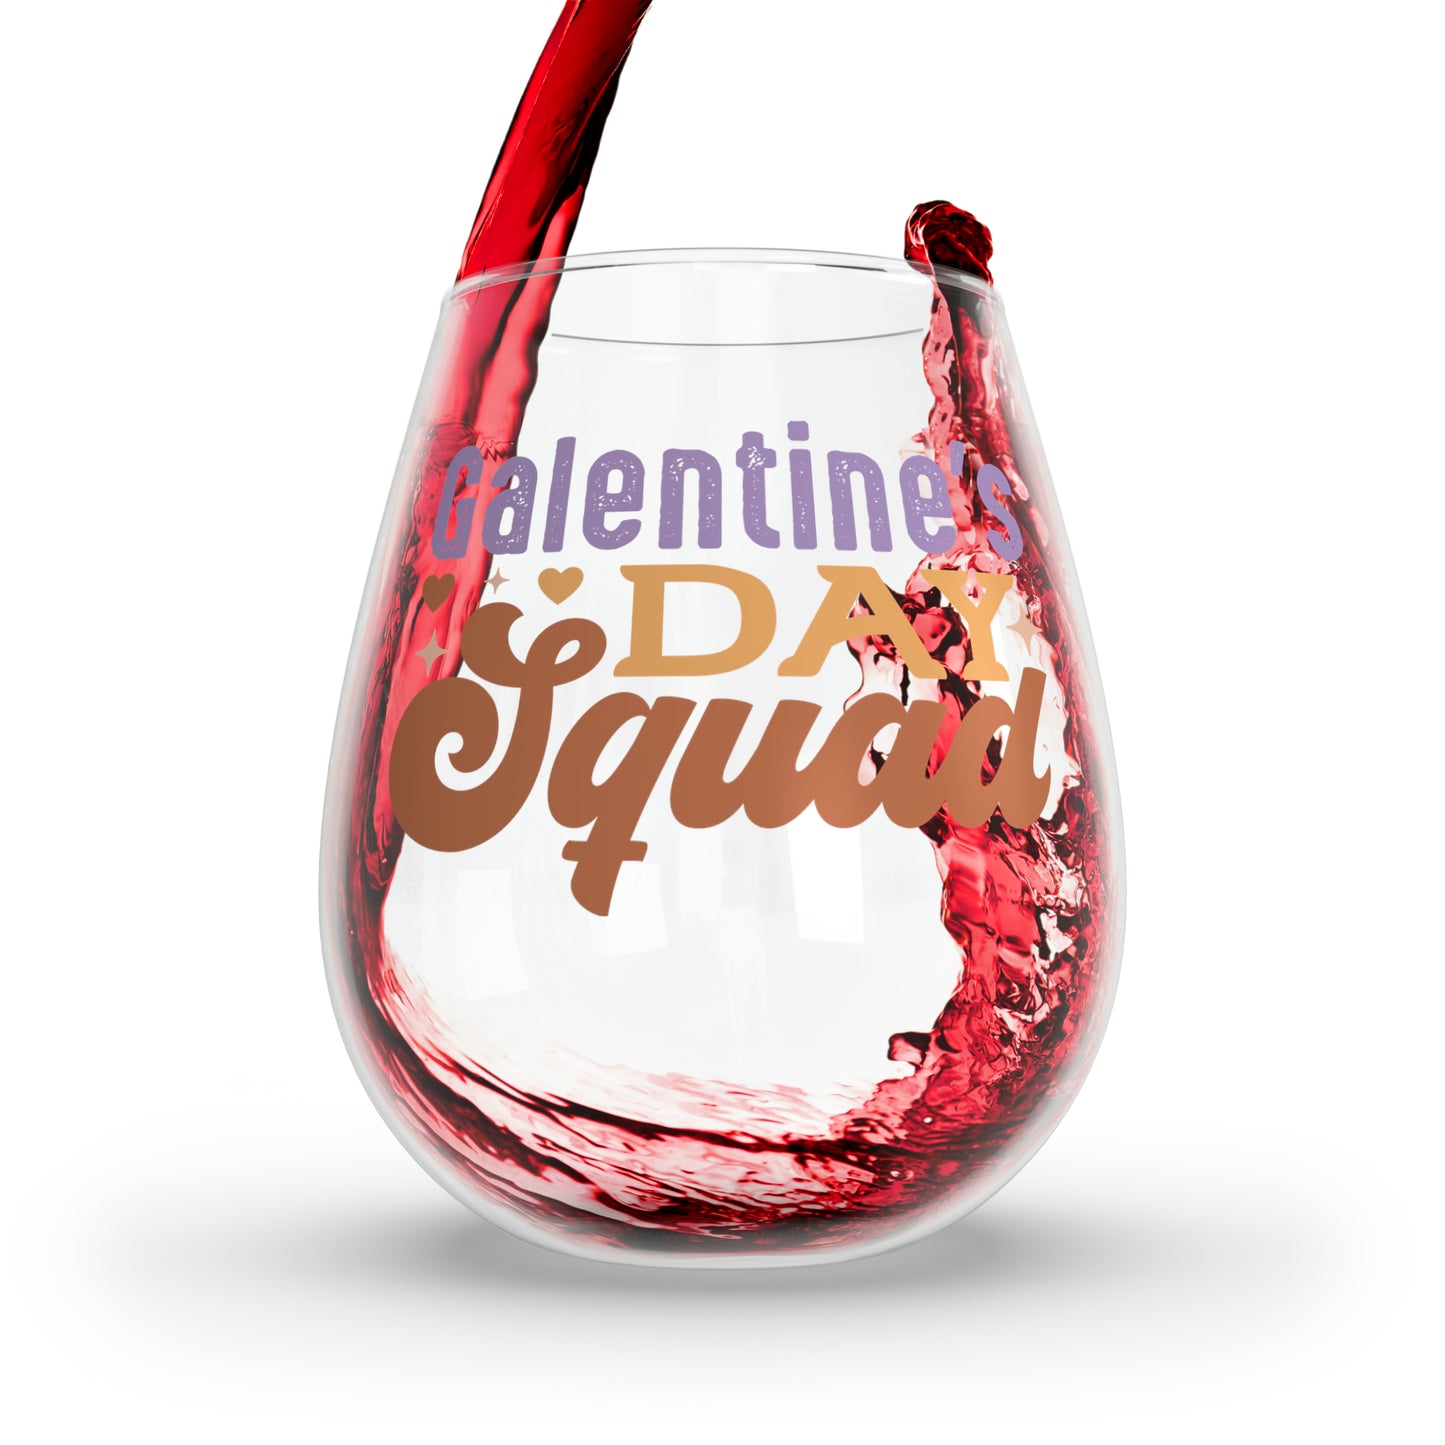 Galentine's Day Squad Stemless Wine Glass, 11.75oz